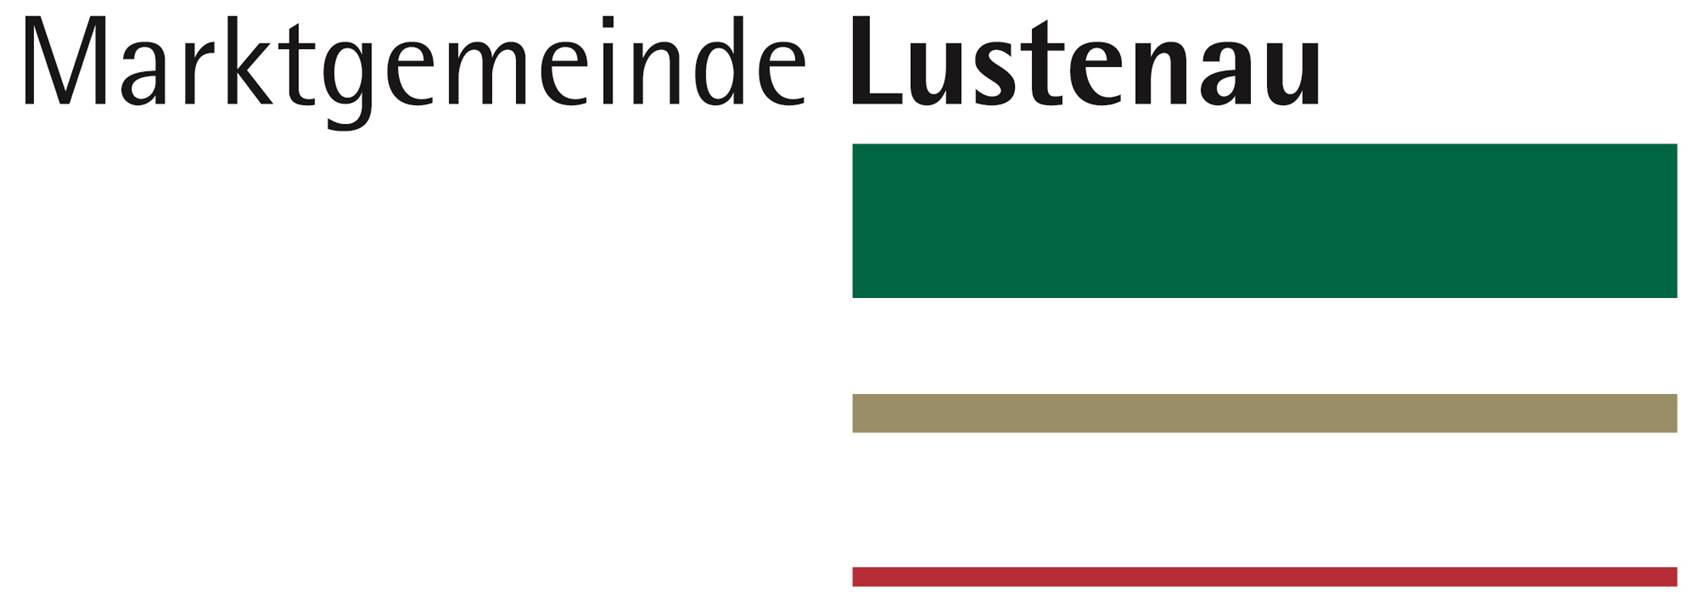 MarktgemeindeLustenau_Logo